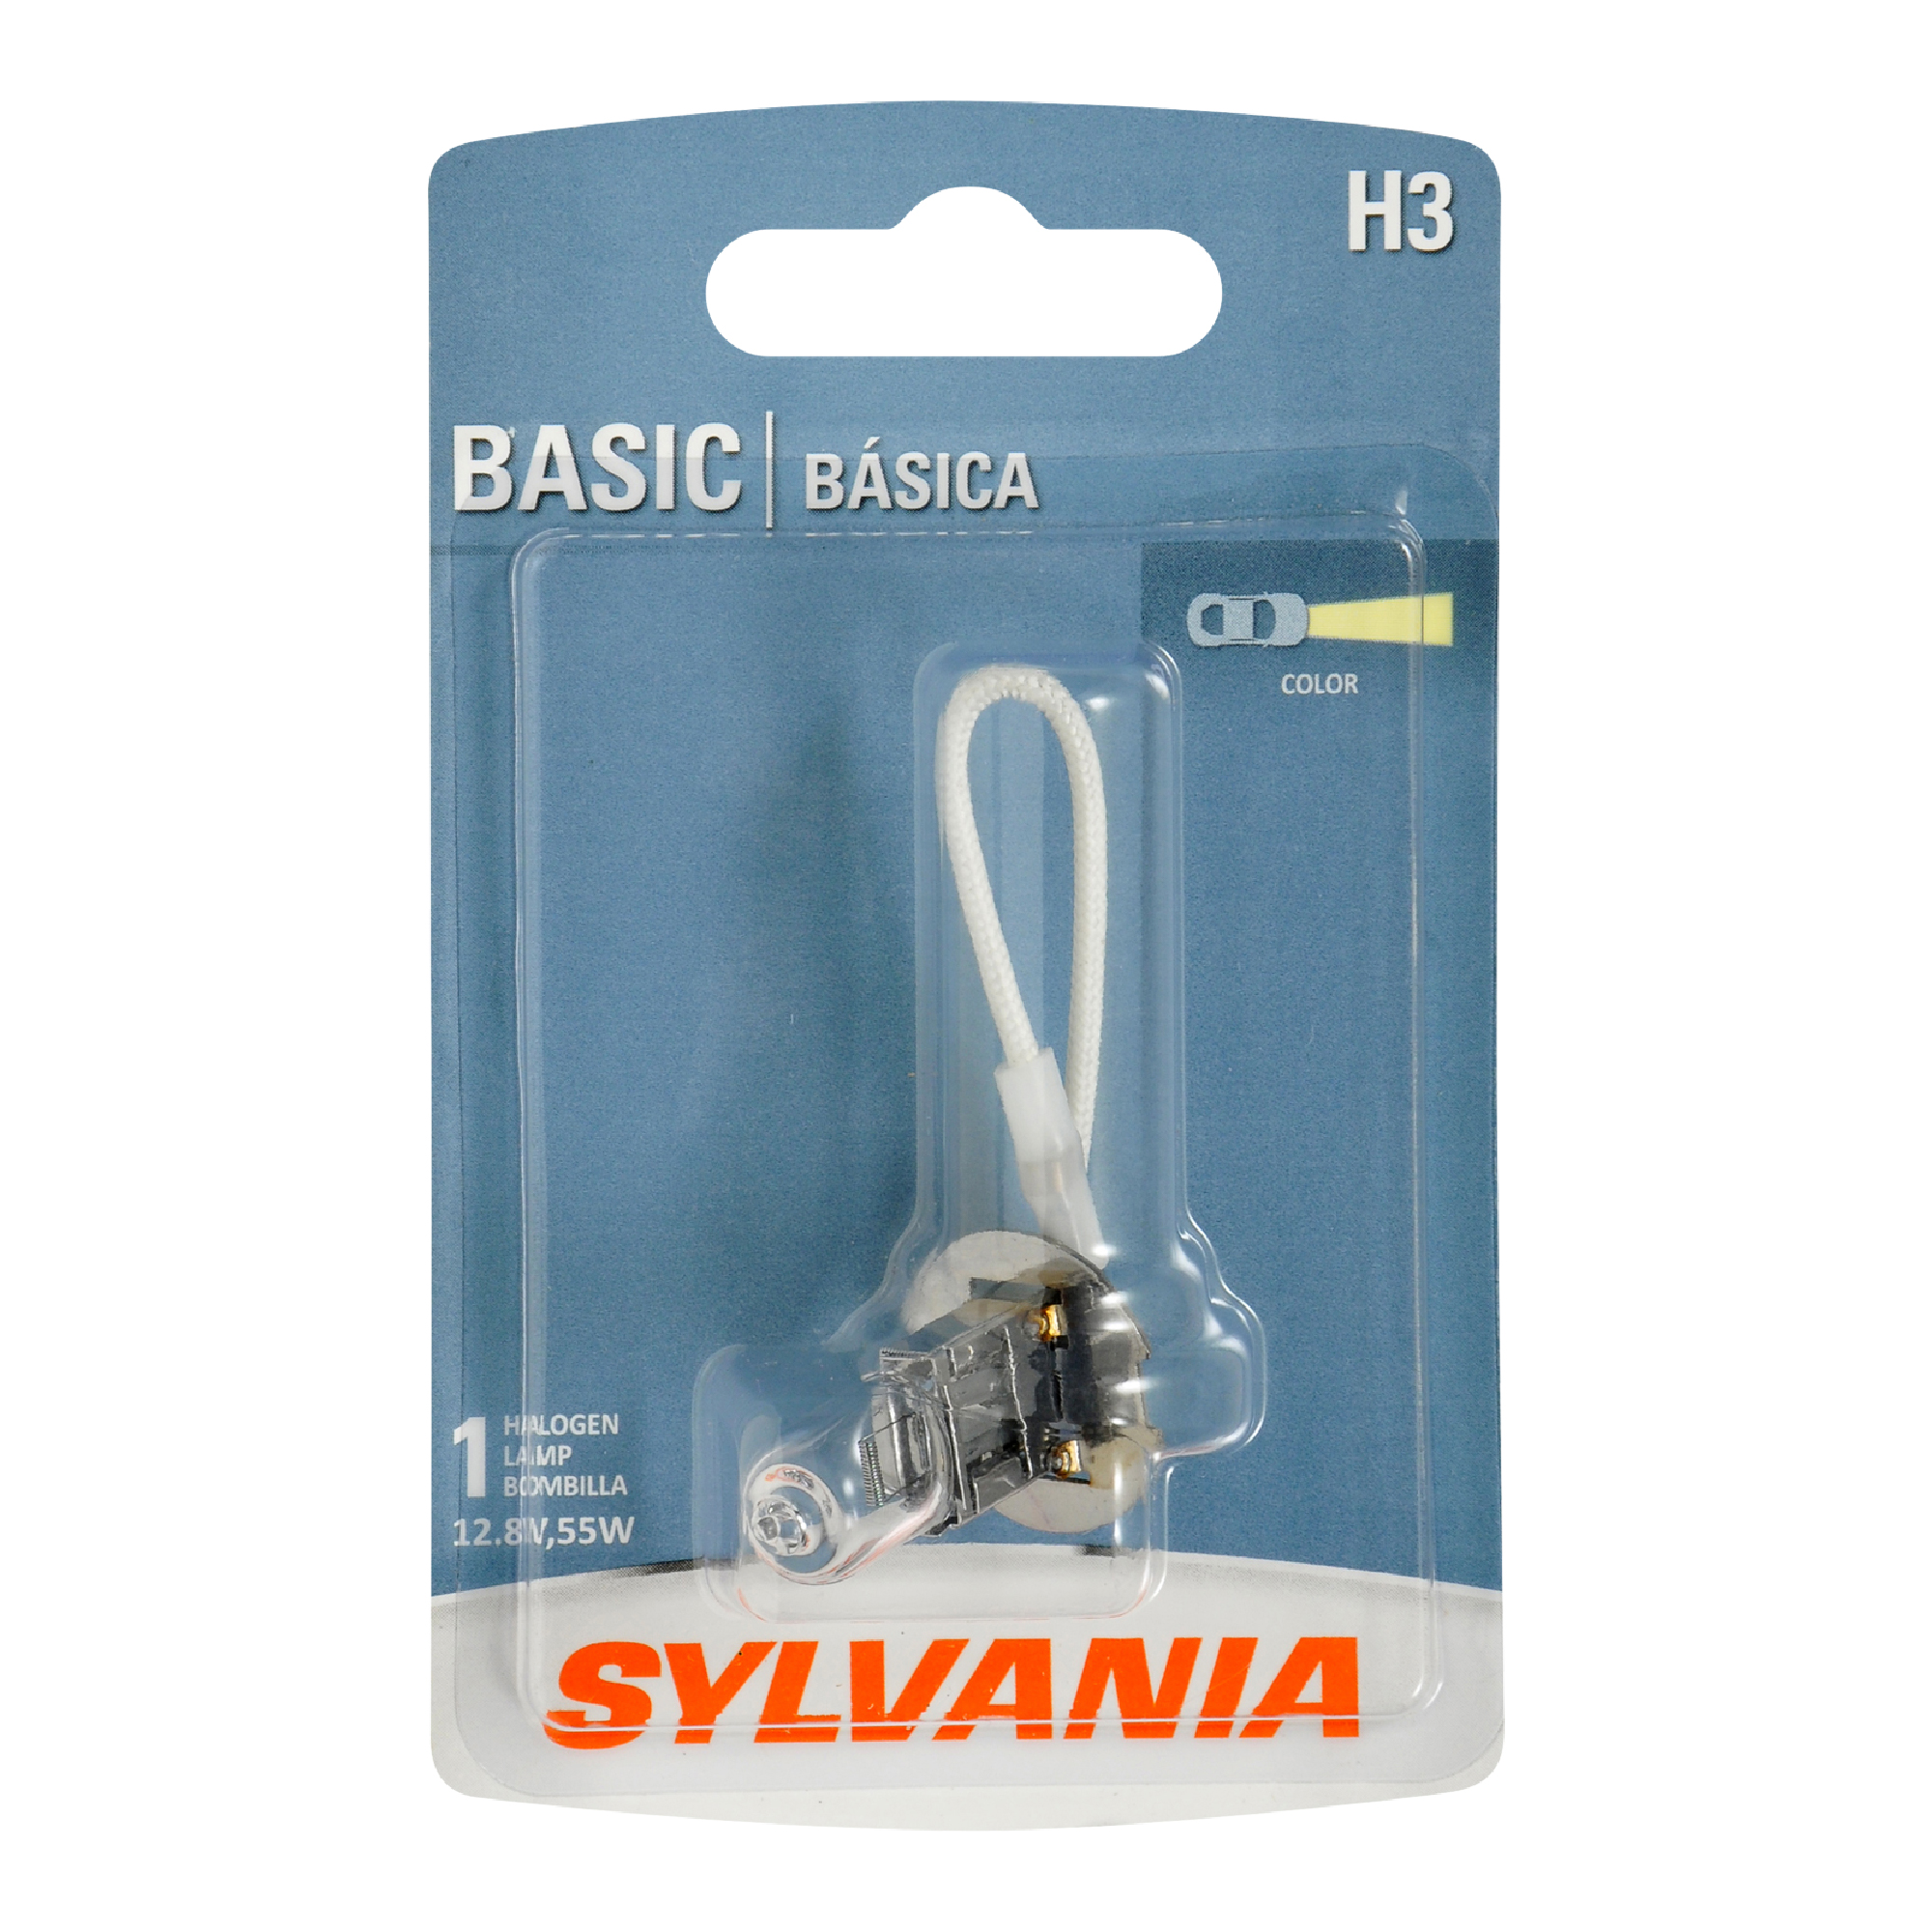 SYLVANIA H3 Basic Fog Bulb, 1 Pack - image 1 of 8